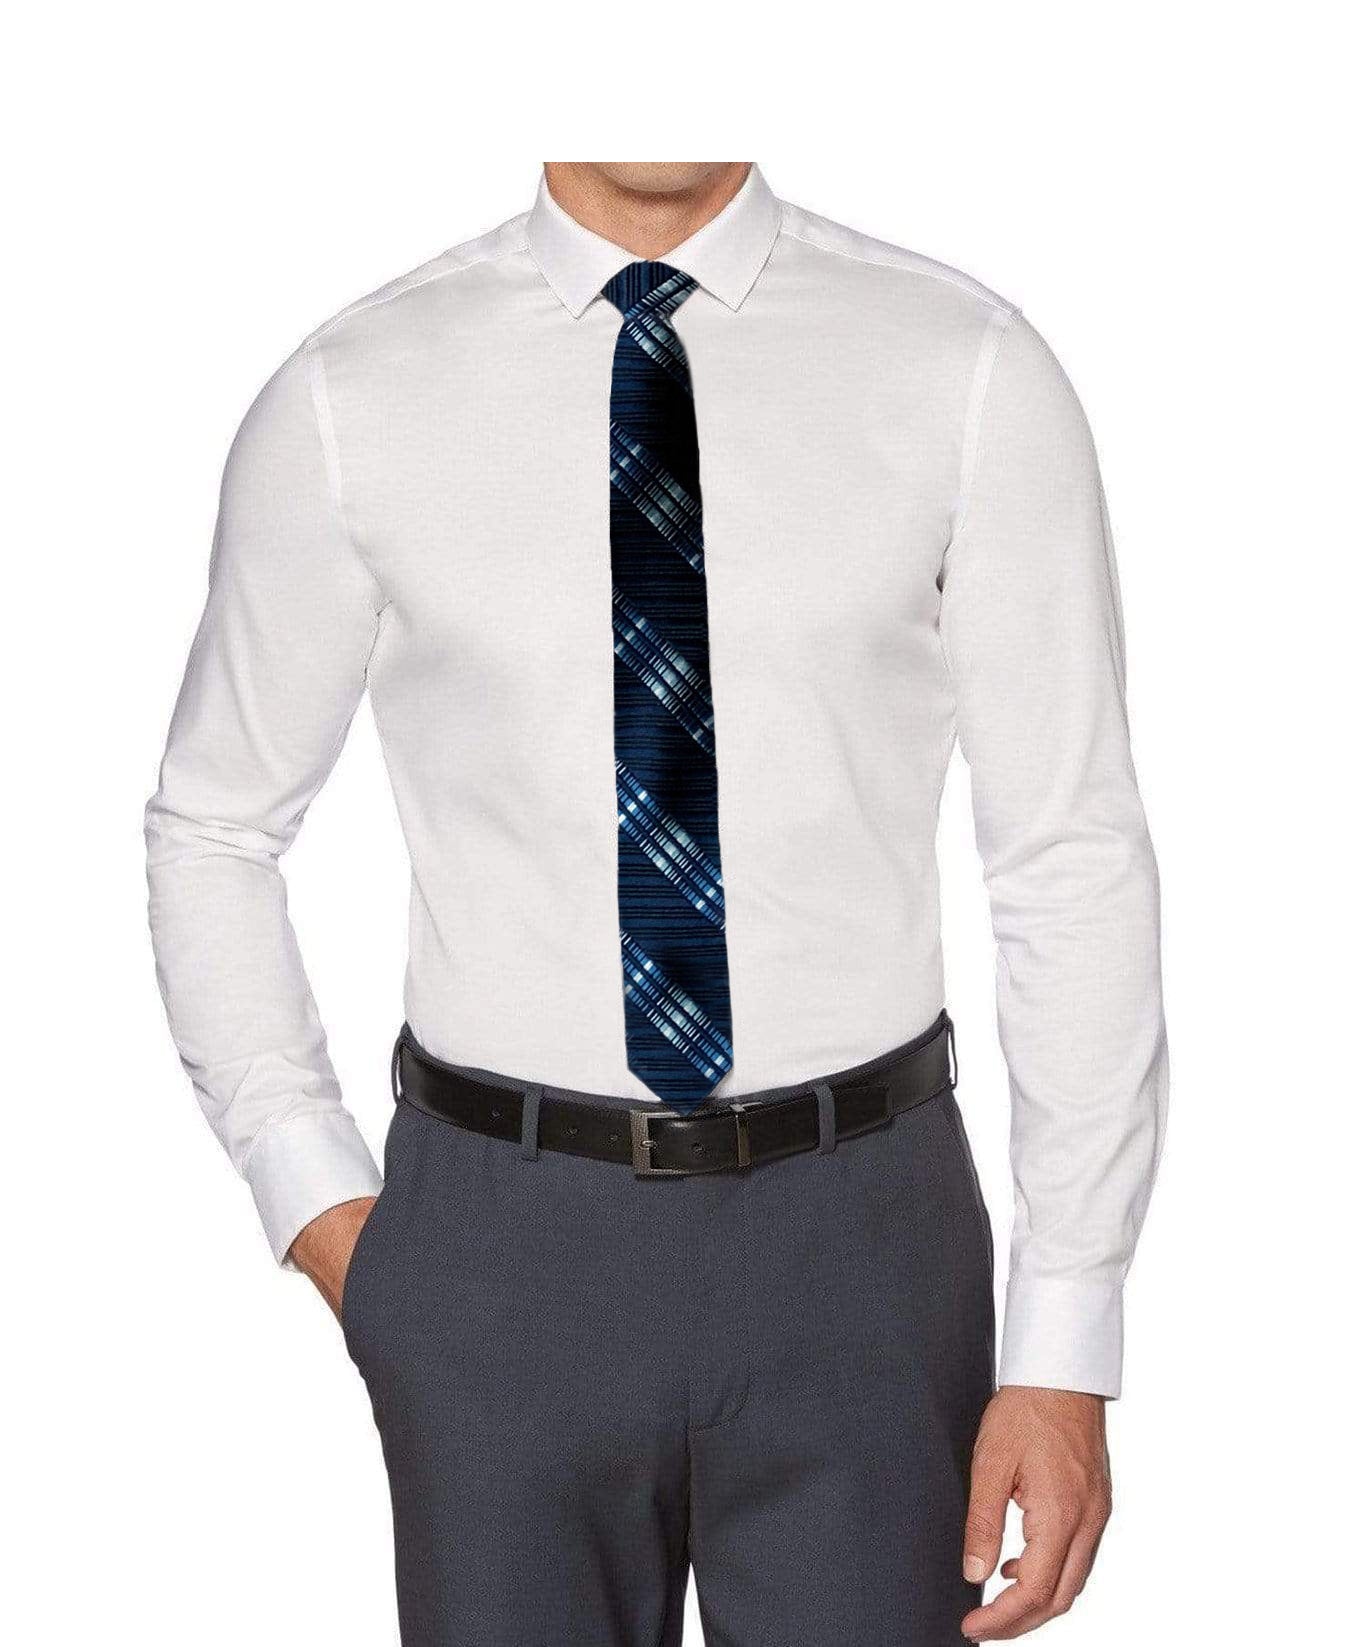 Perry Ellis Boys Dress Shirts w R Blue Tie Solid Shirts w Patterned Tie